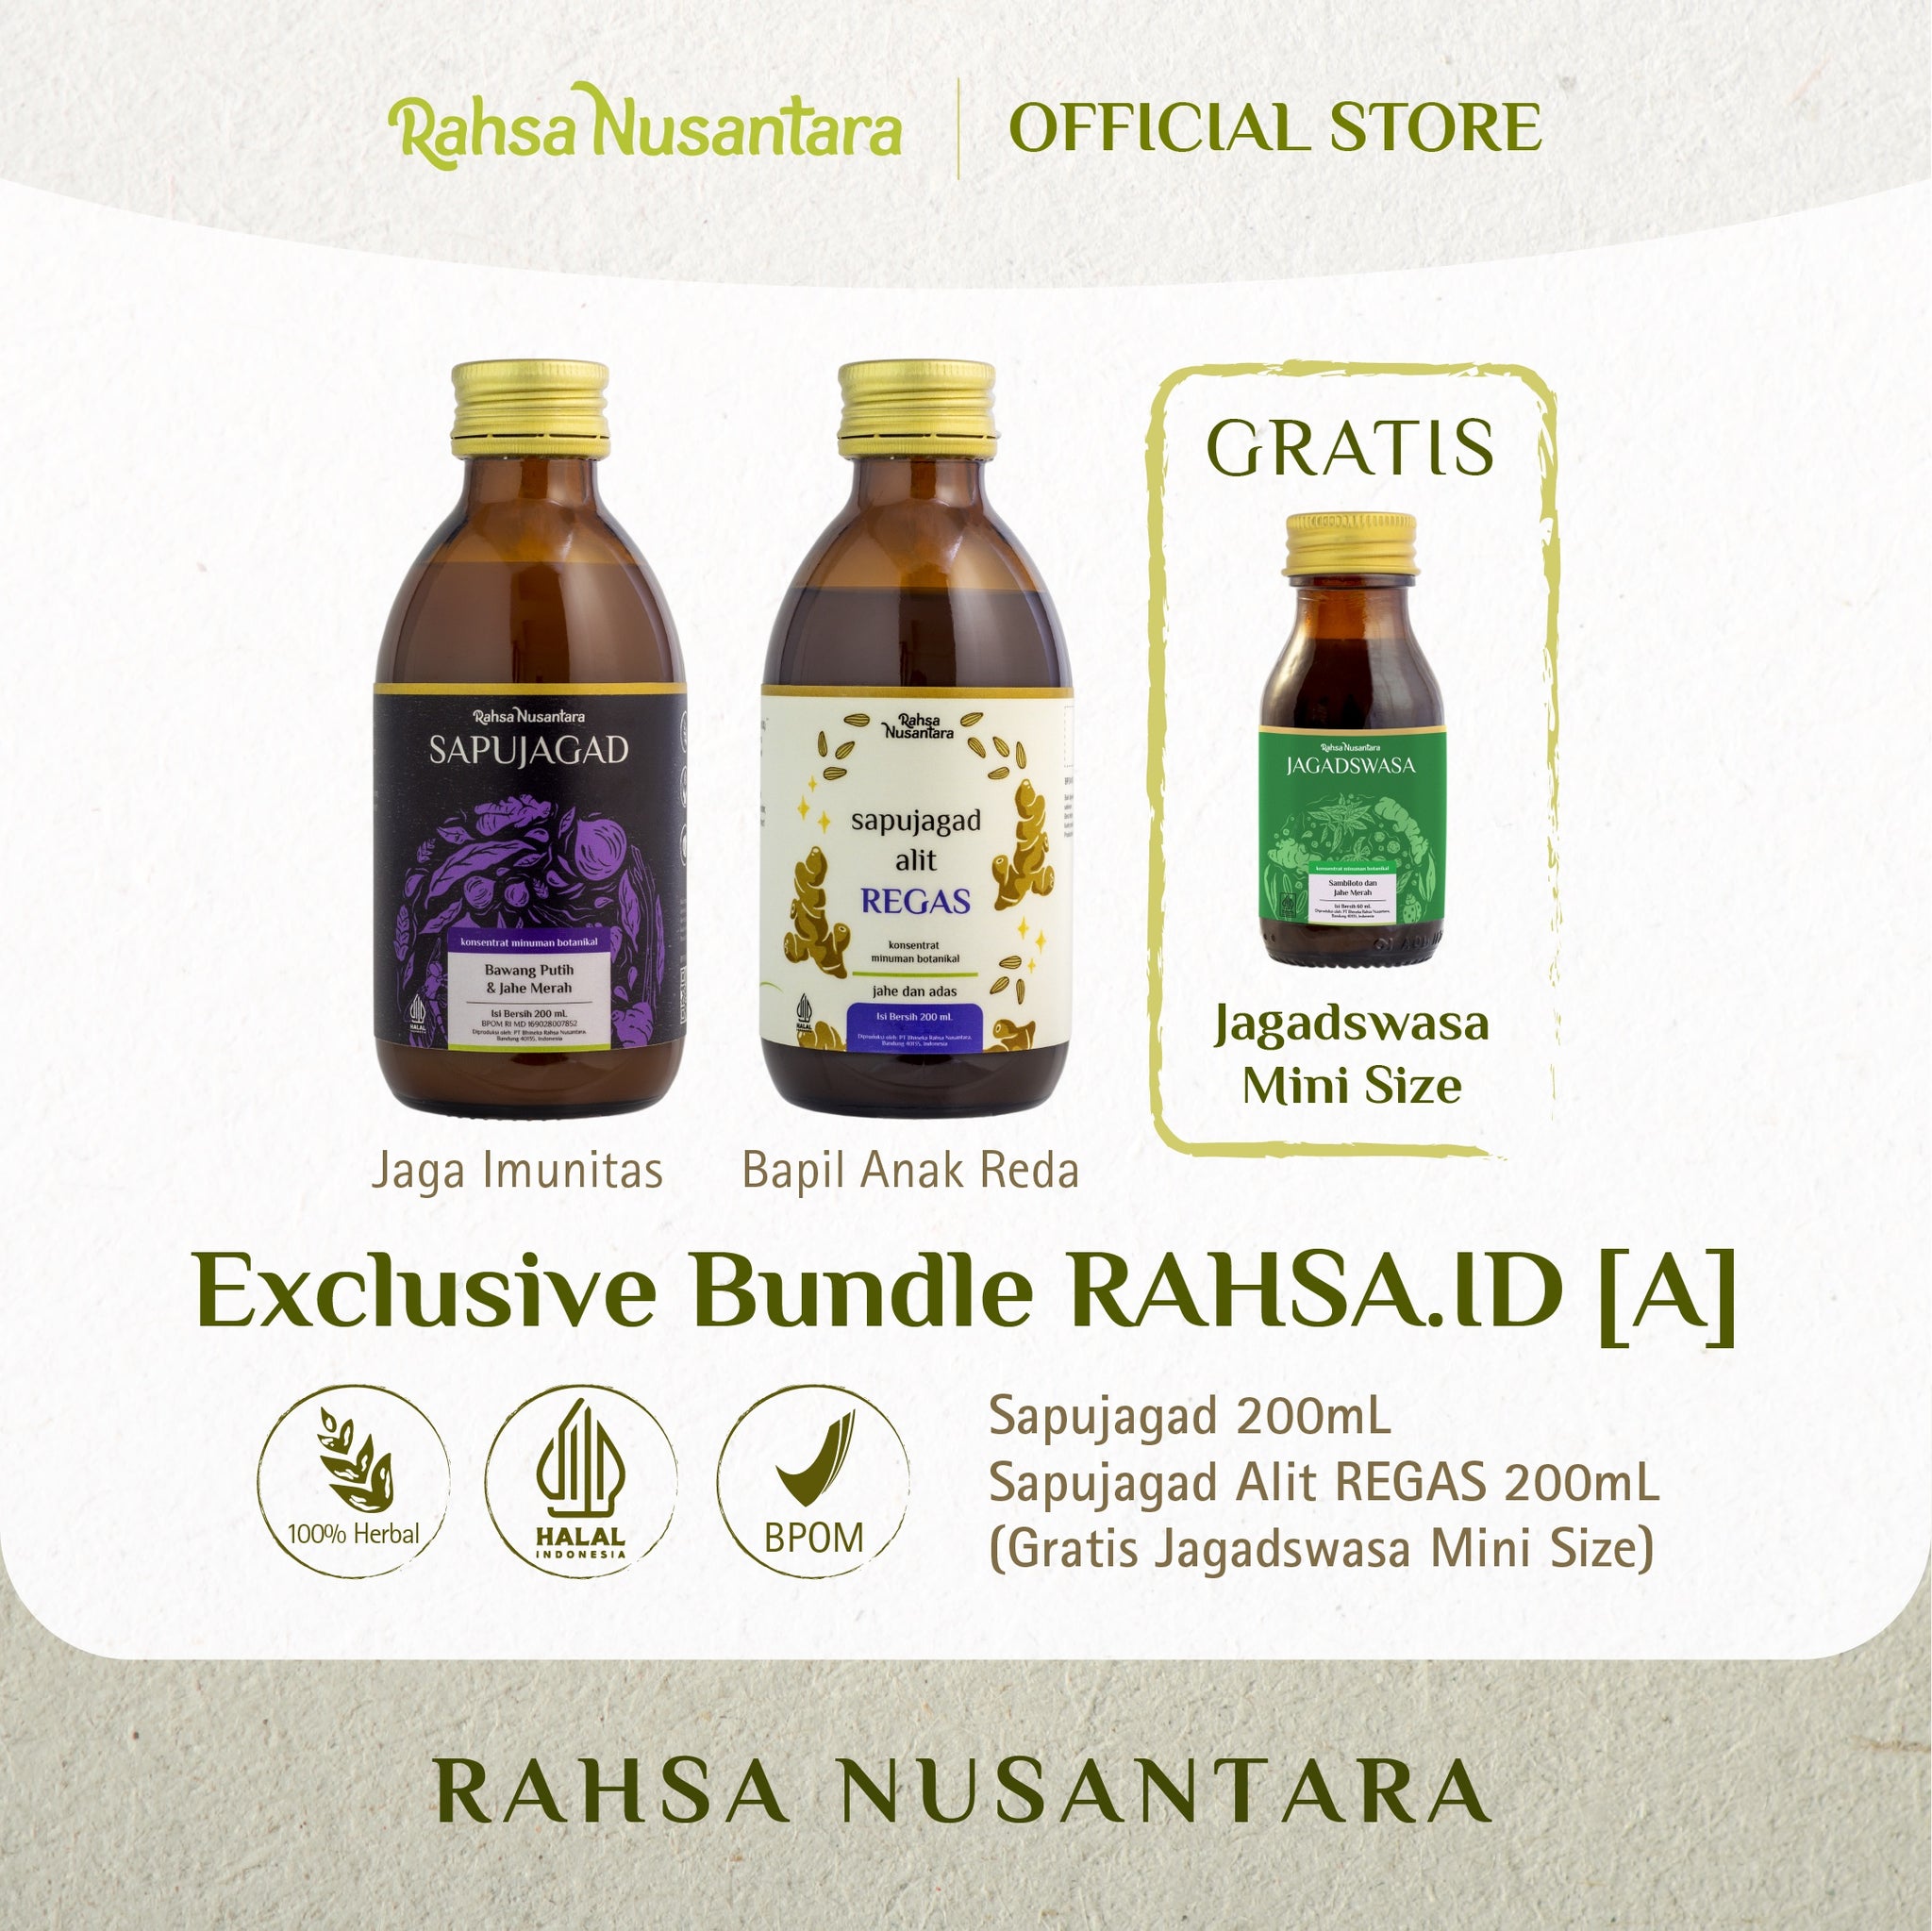 Exclusive Bundle Rahsa.id GRATIS JAGADSWASA